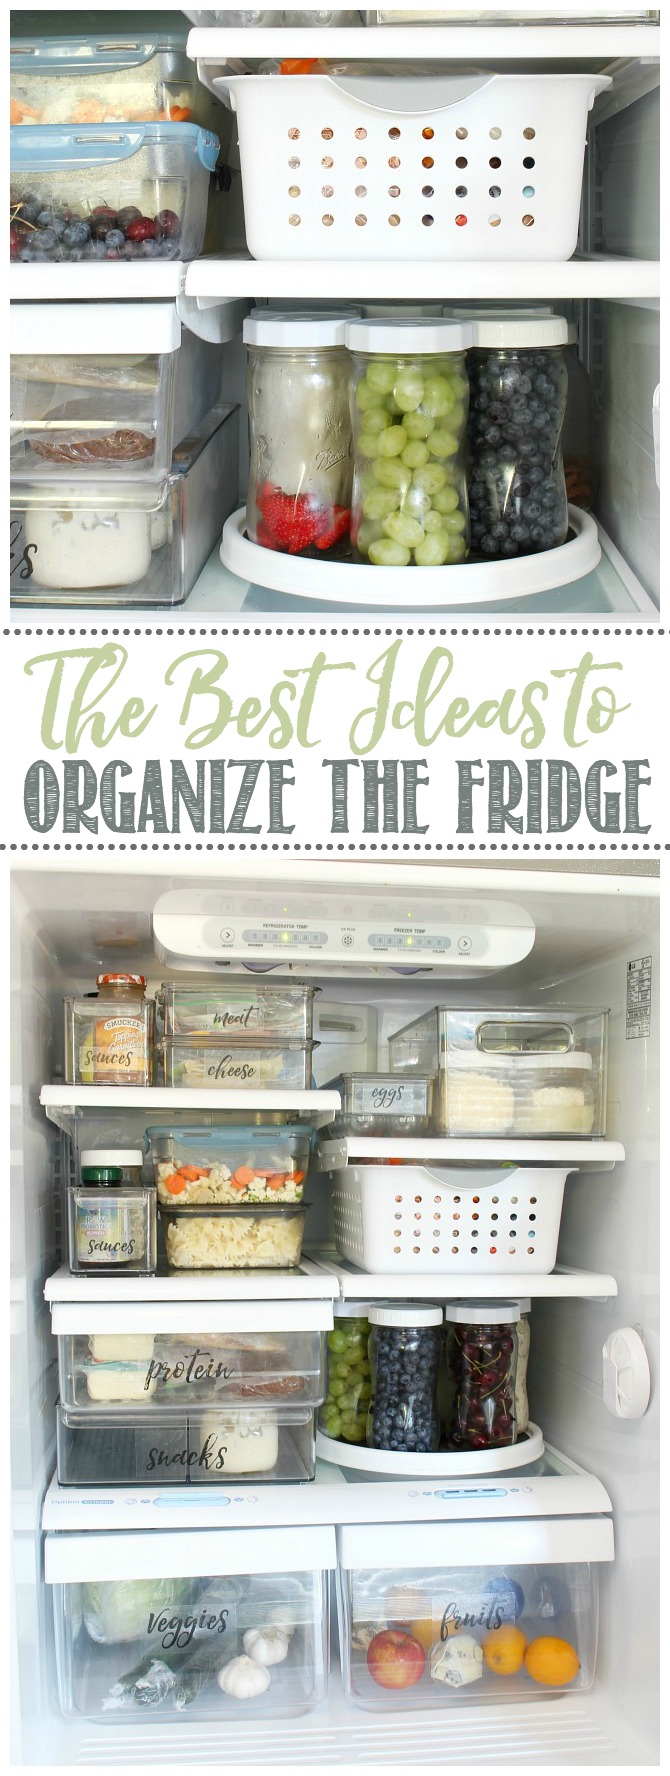 Organized fridge space using bins and mason jars.